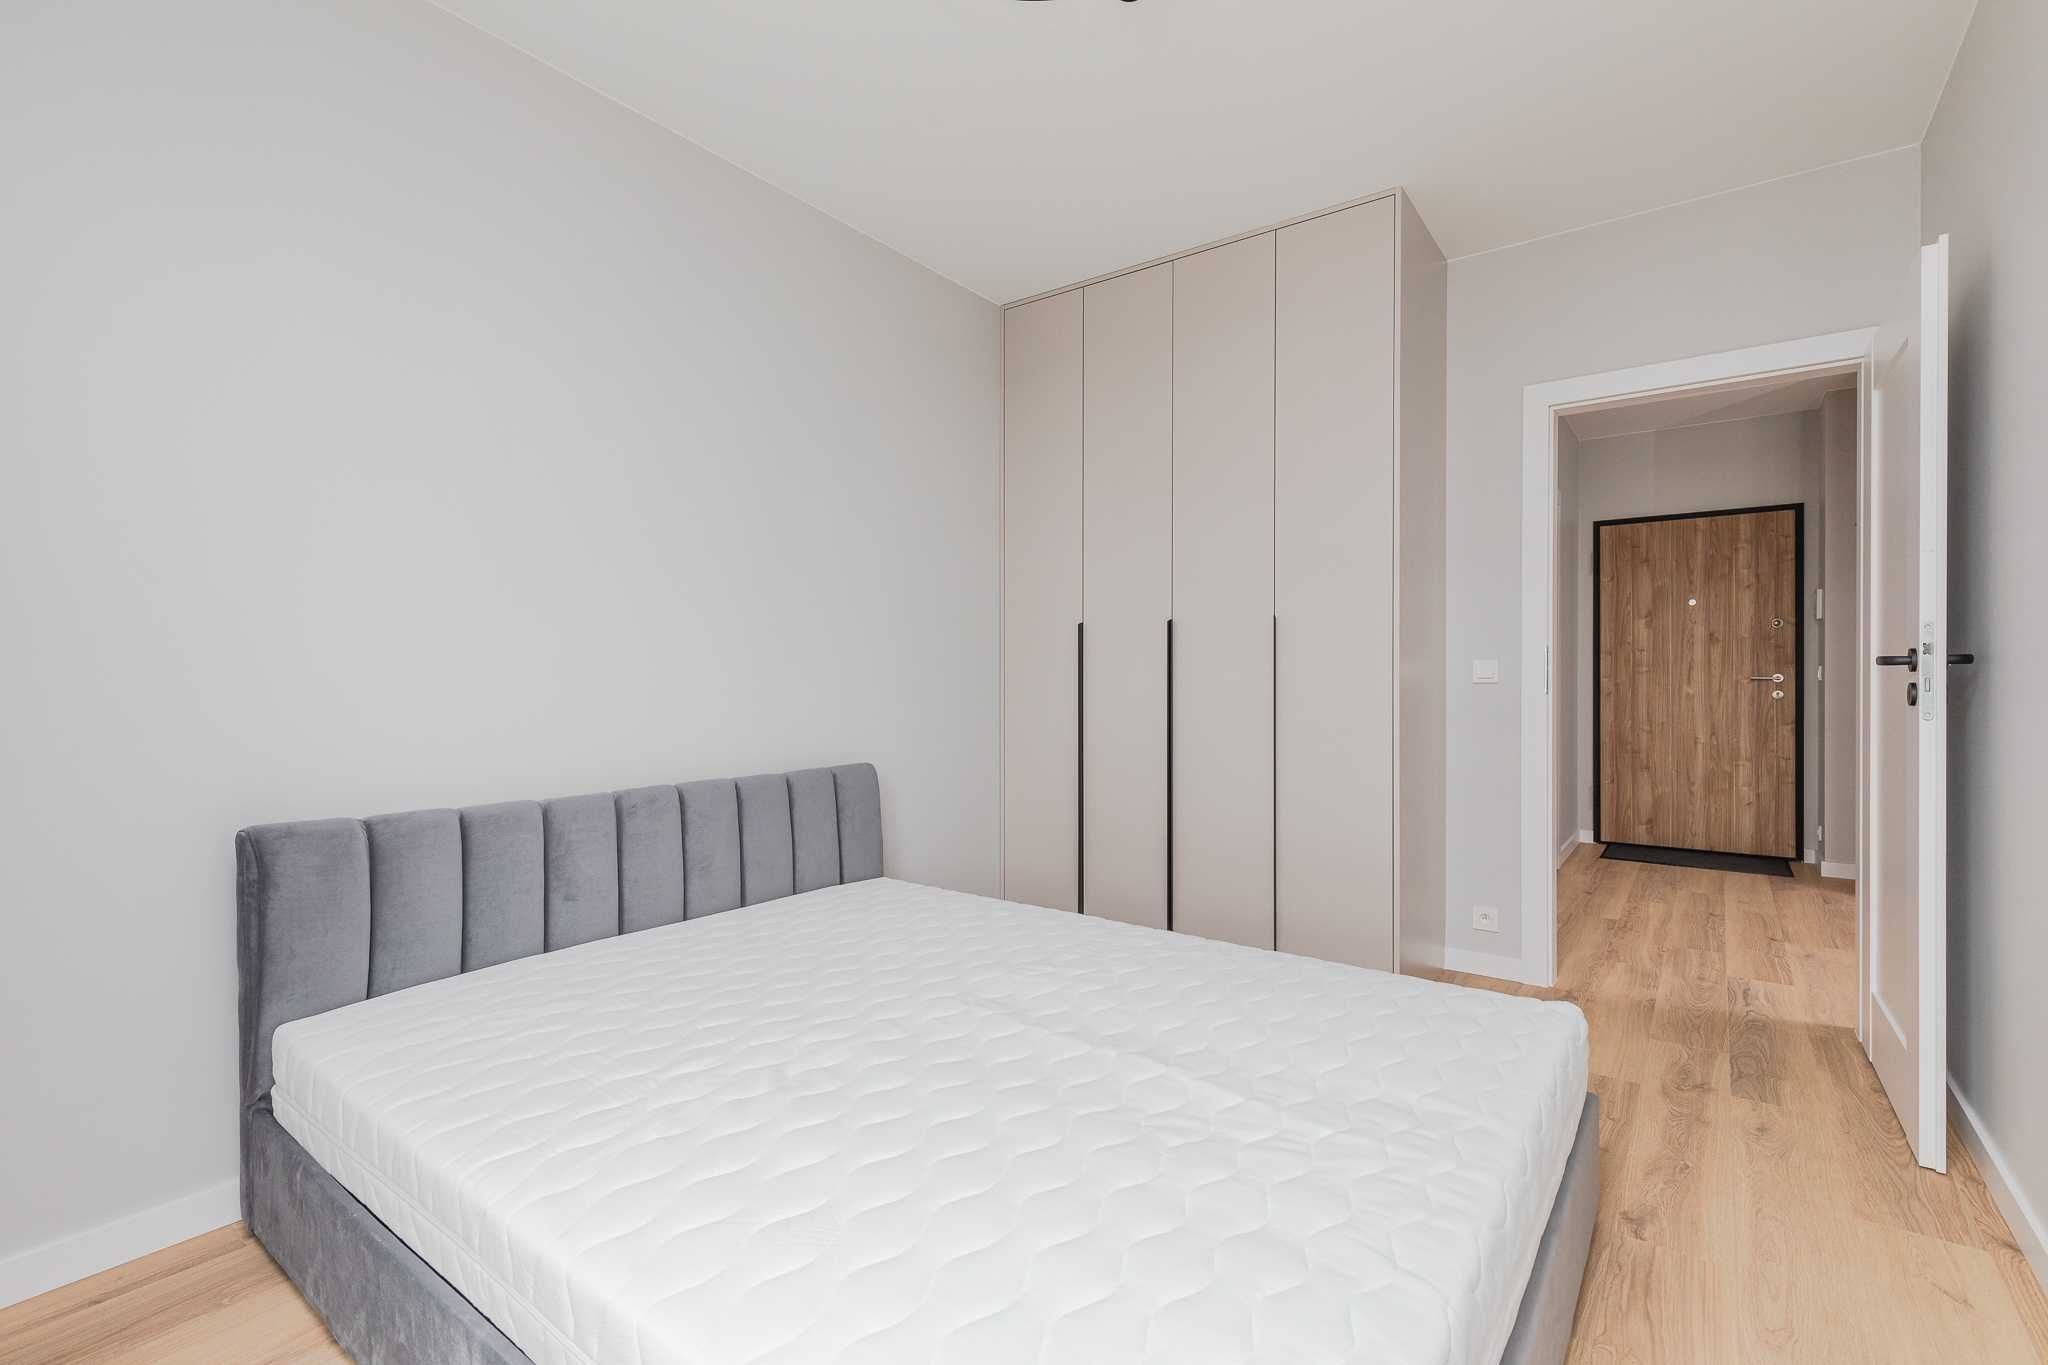 New two-room apartment, Lazurowa, Warsaw